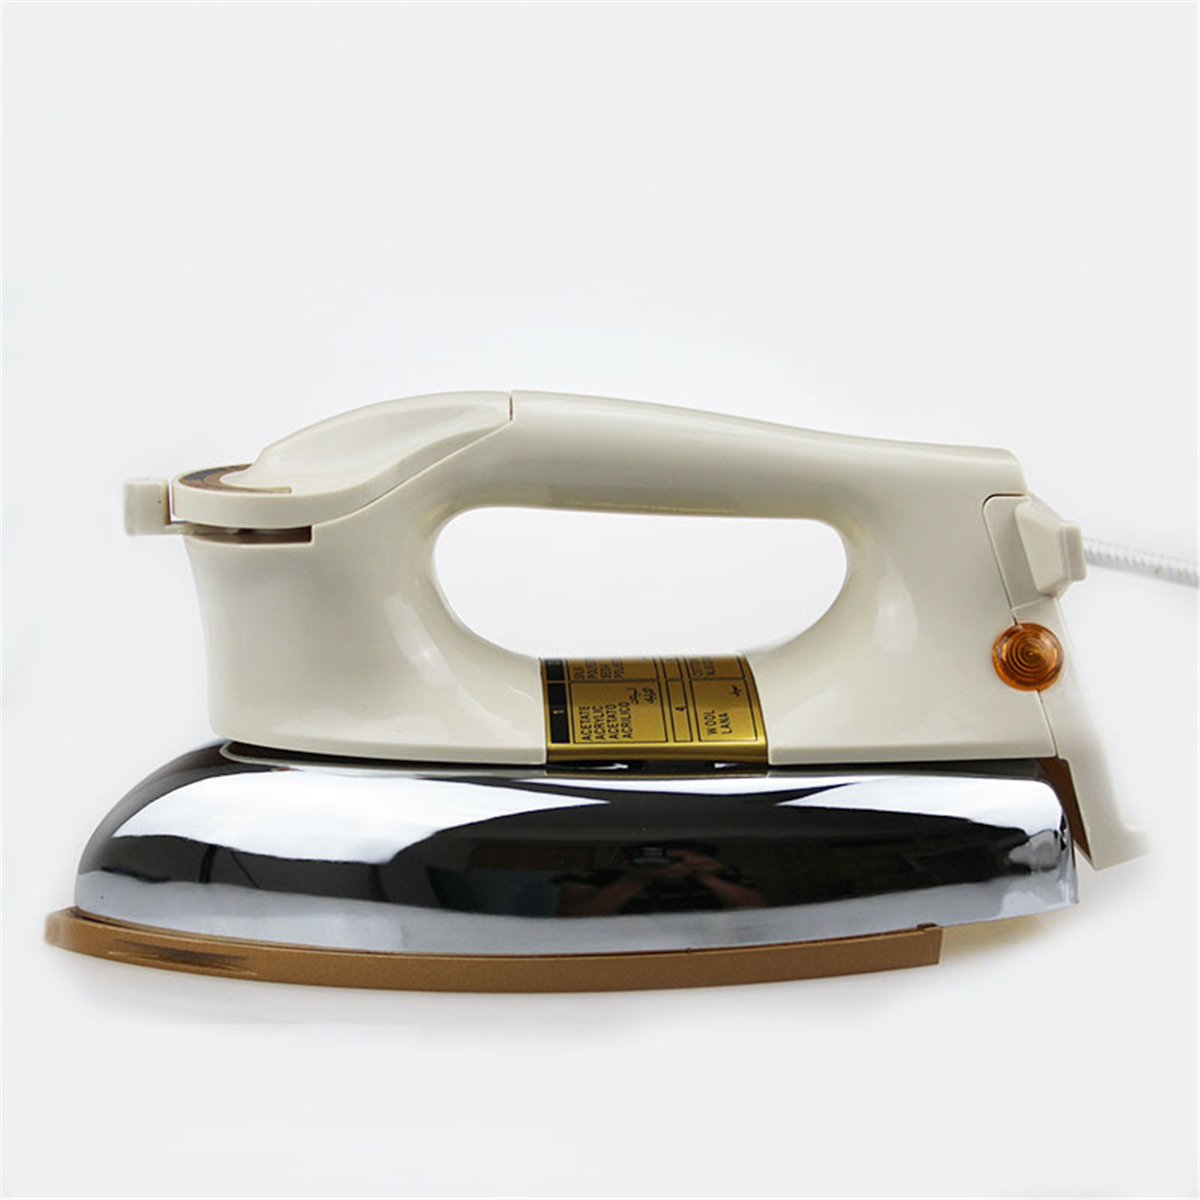 Handheld-Steam-Iron-Electric-Ironing-Machine-Portable-Travel-Home-Cloth-Garment-Steamer-1739502-6